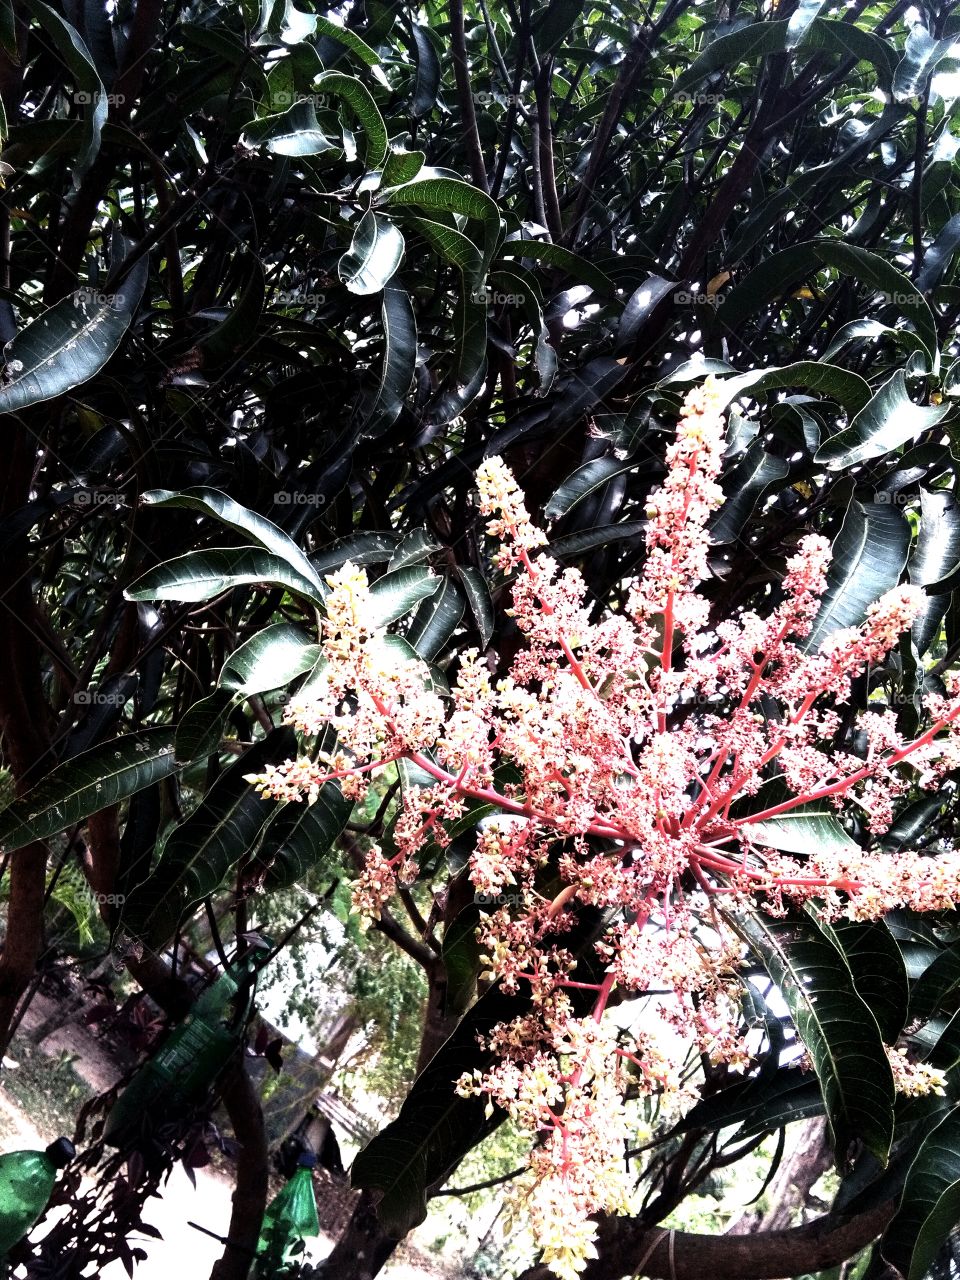 Mango flowers